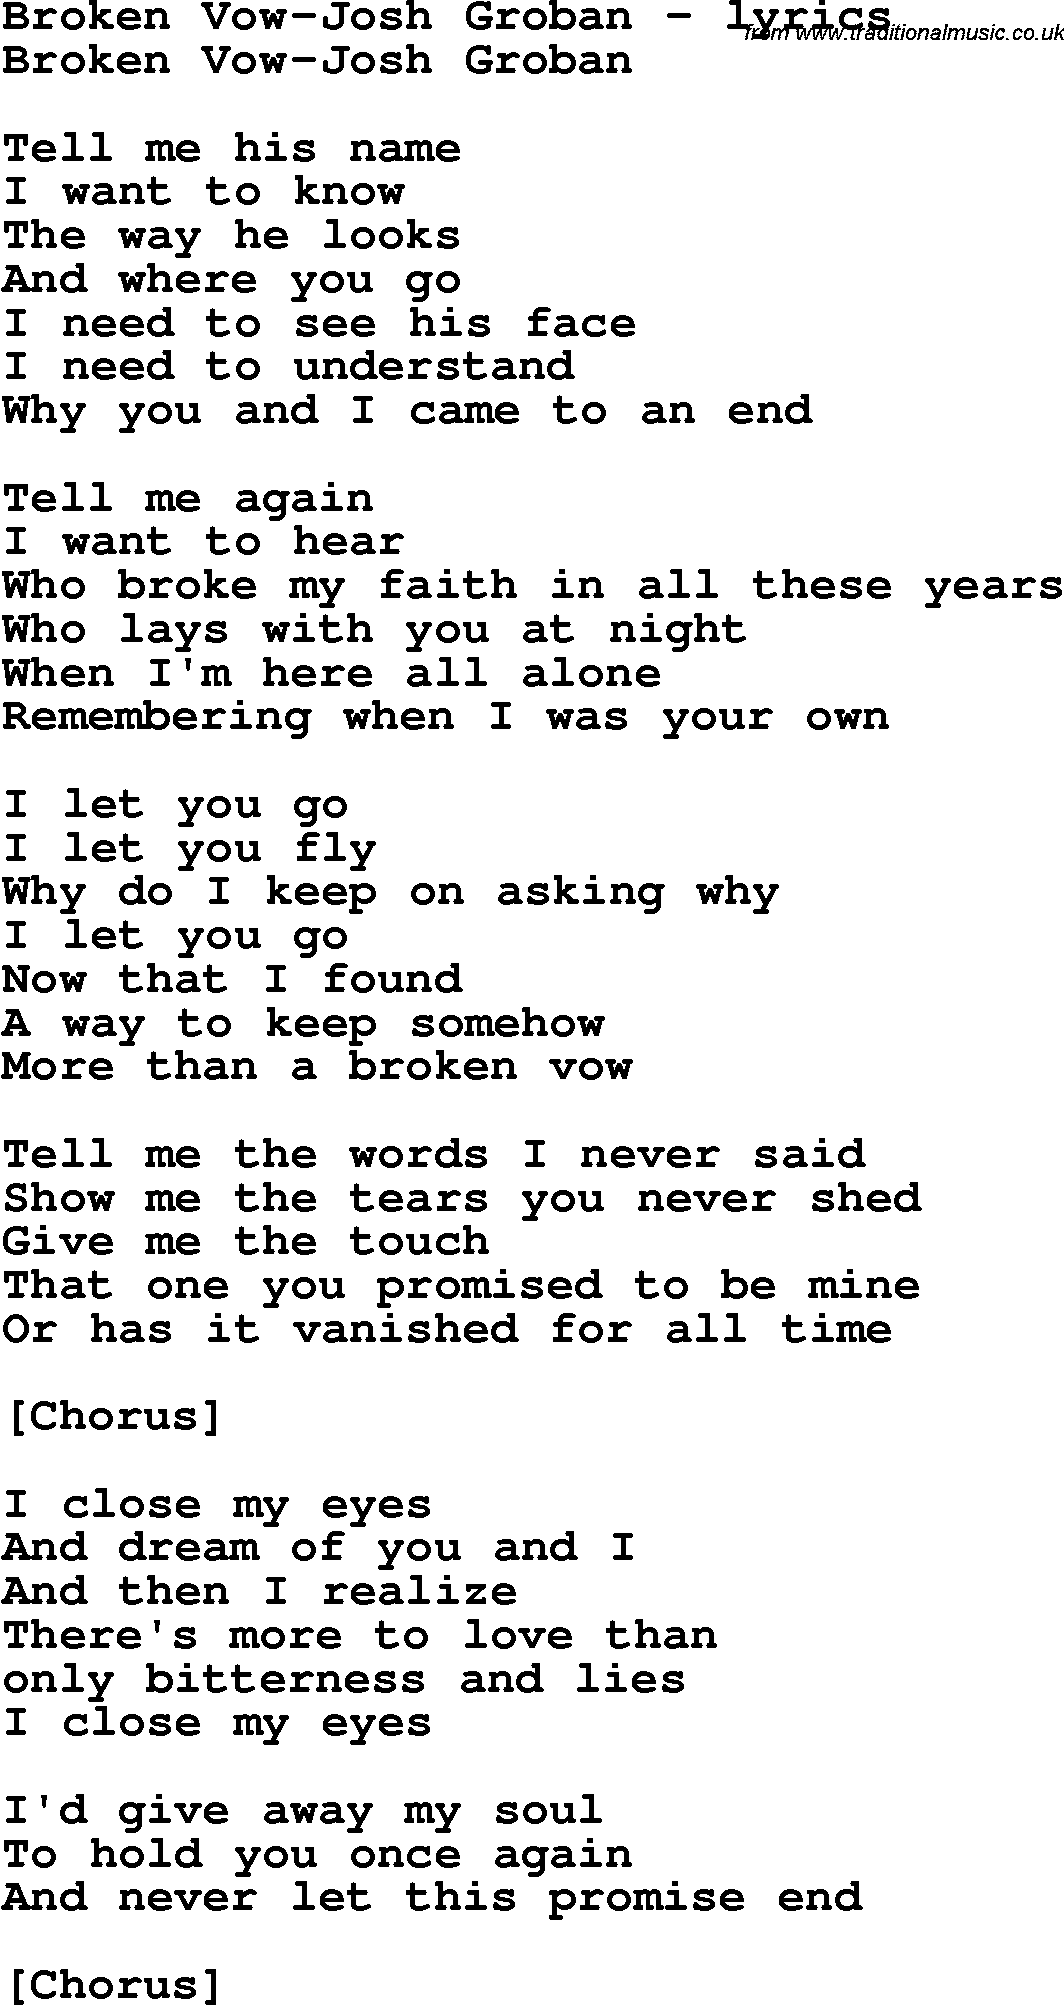 Love Song Lyrics for: Broken Vow-Josh Groban